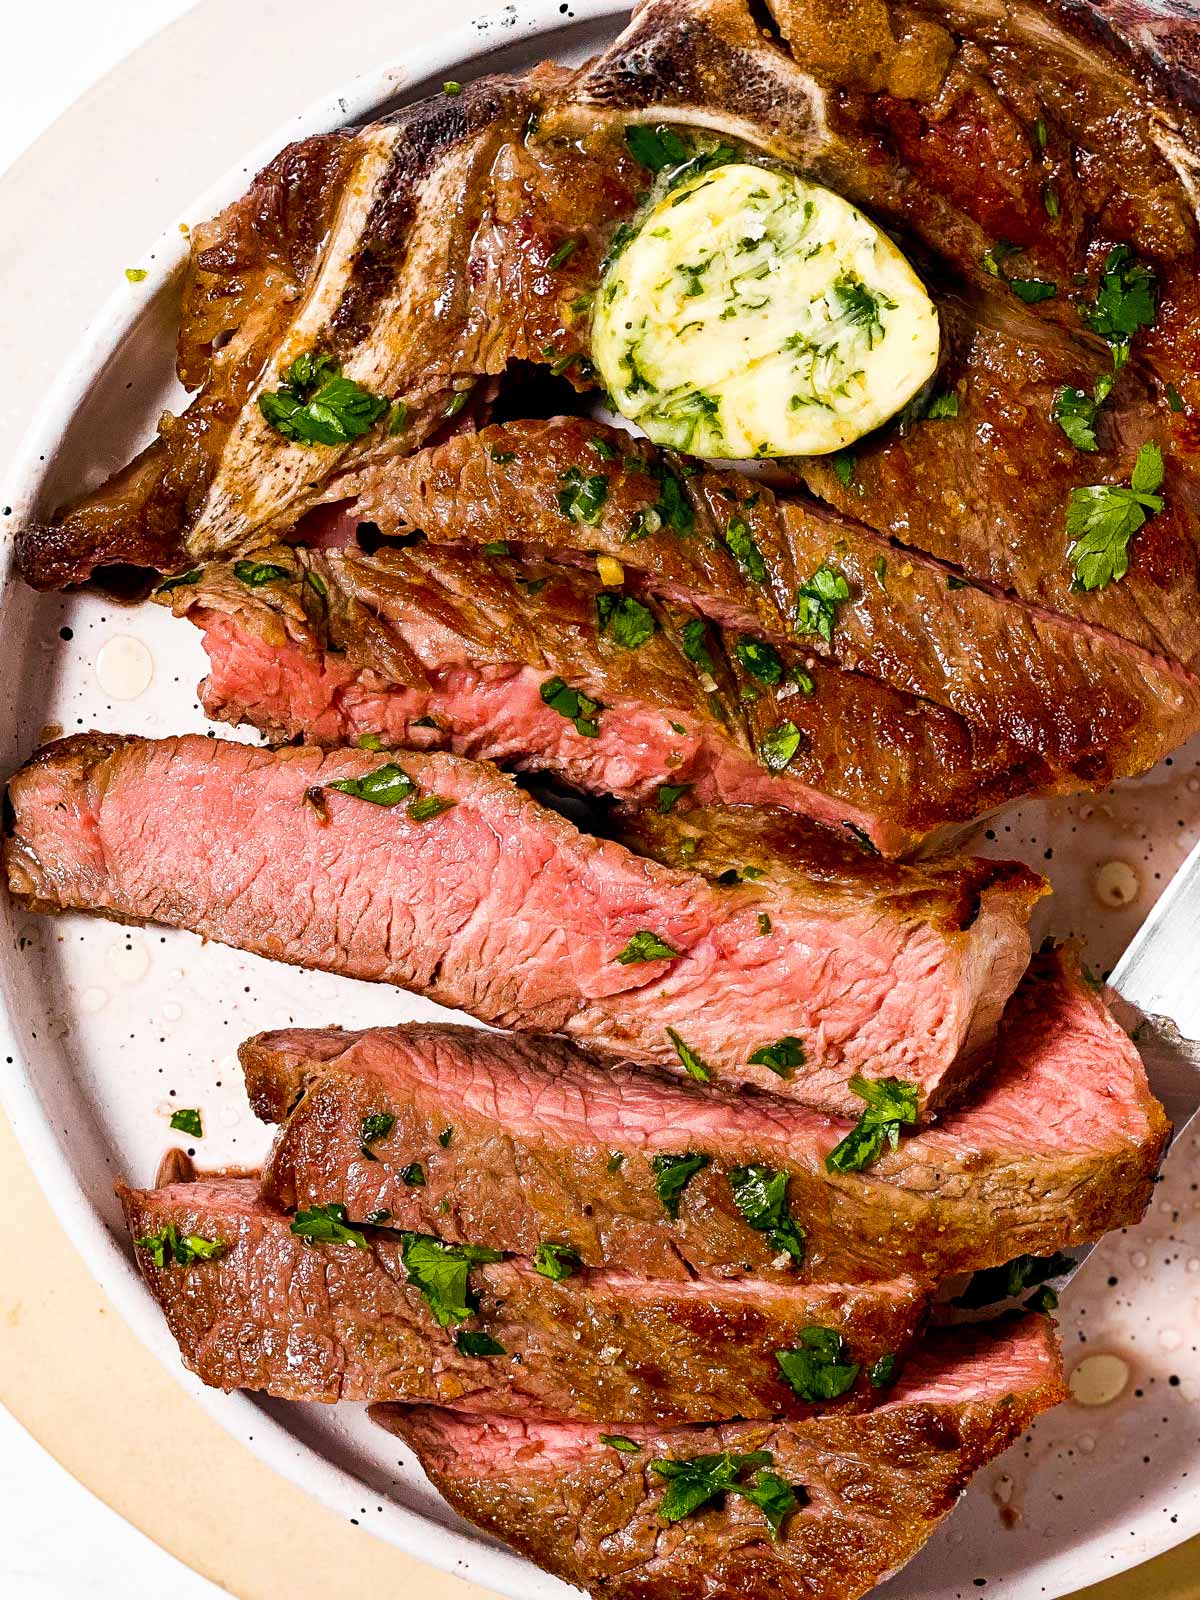 https://www.savorynothings.com/wp-content/uploads/2022/01/oven-baked-steak-recipe-image-6.jpg